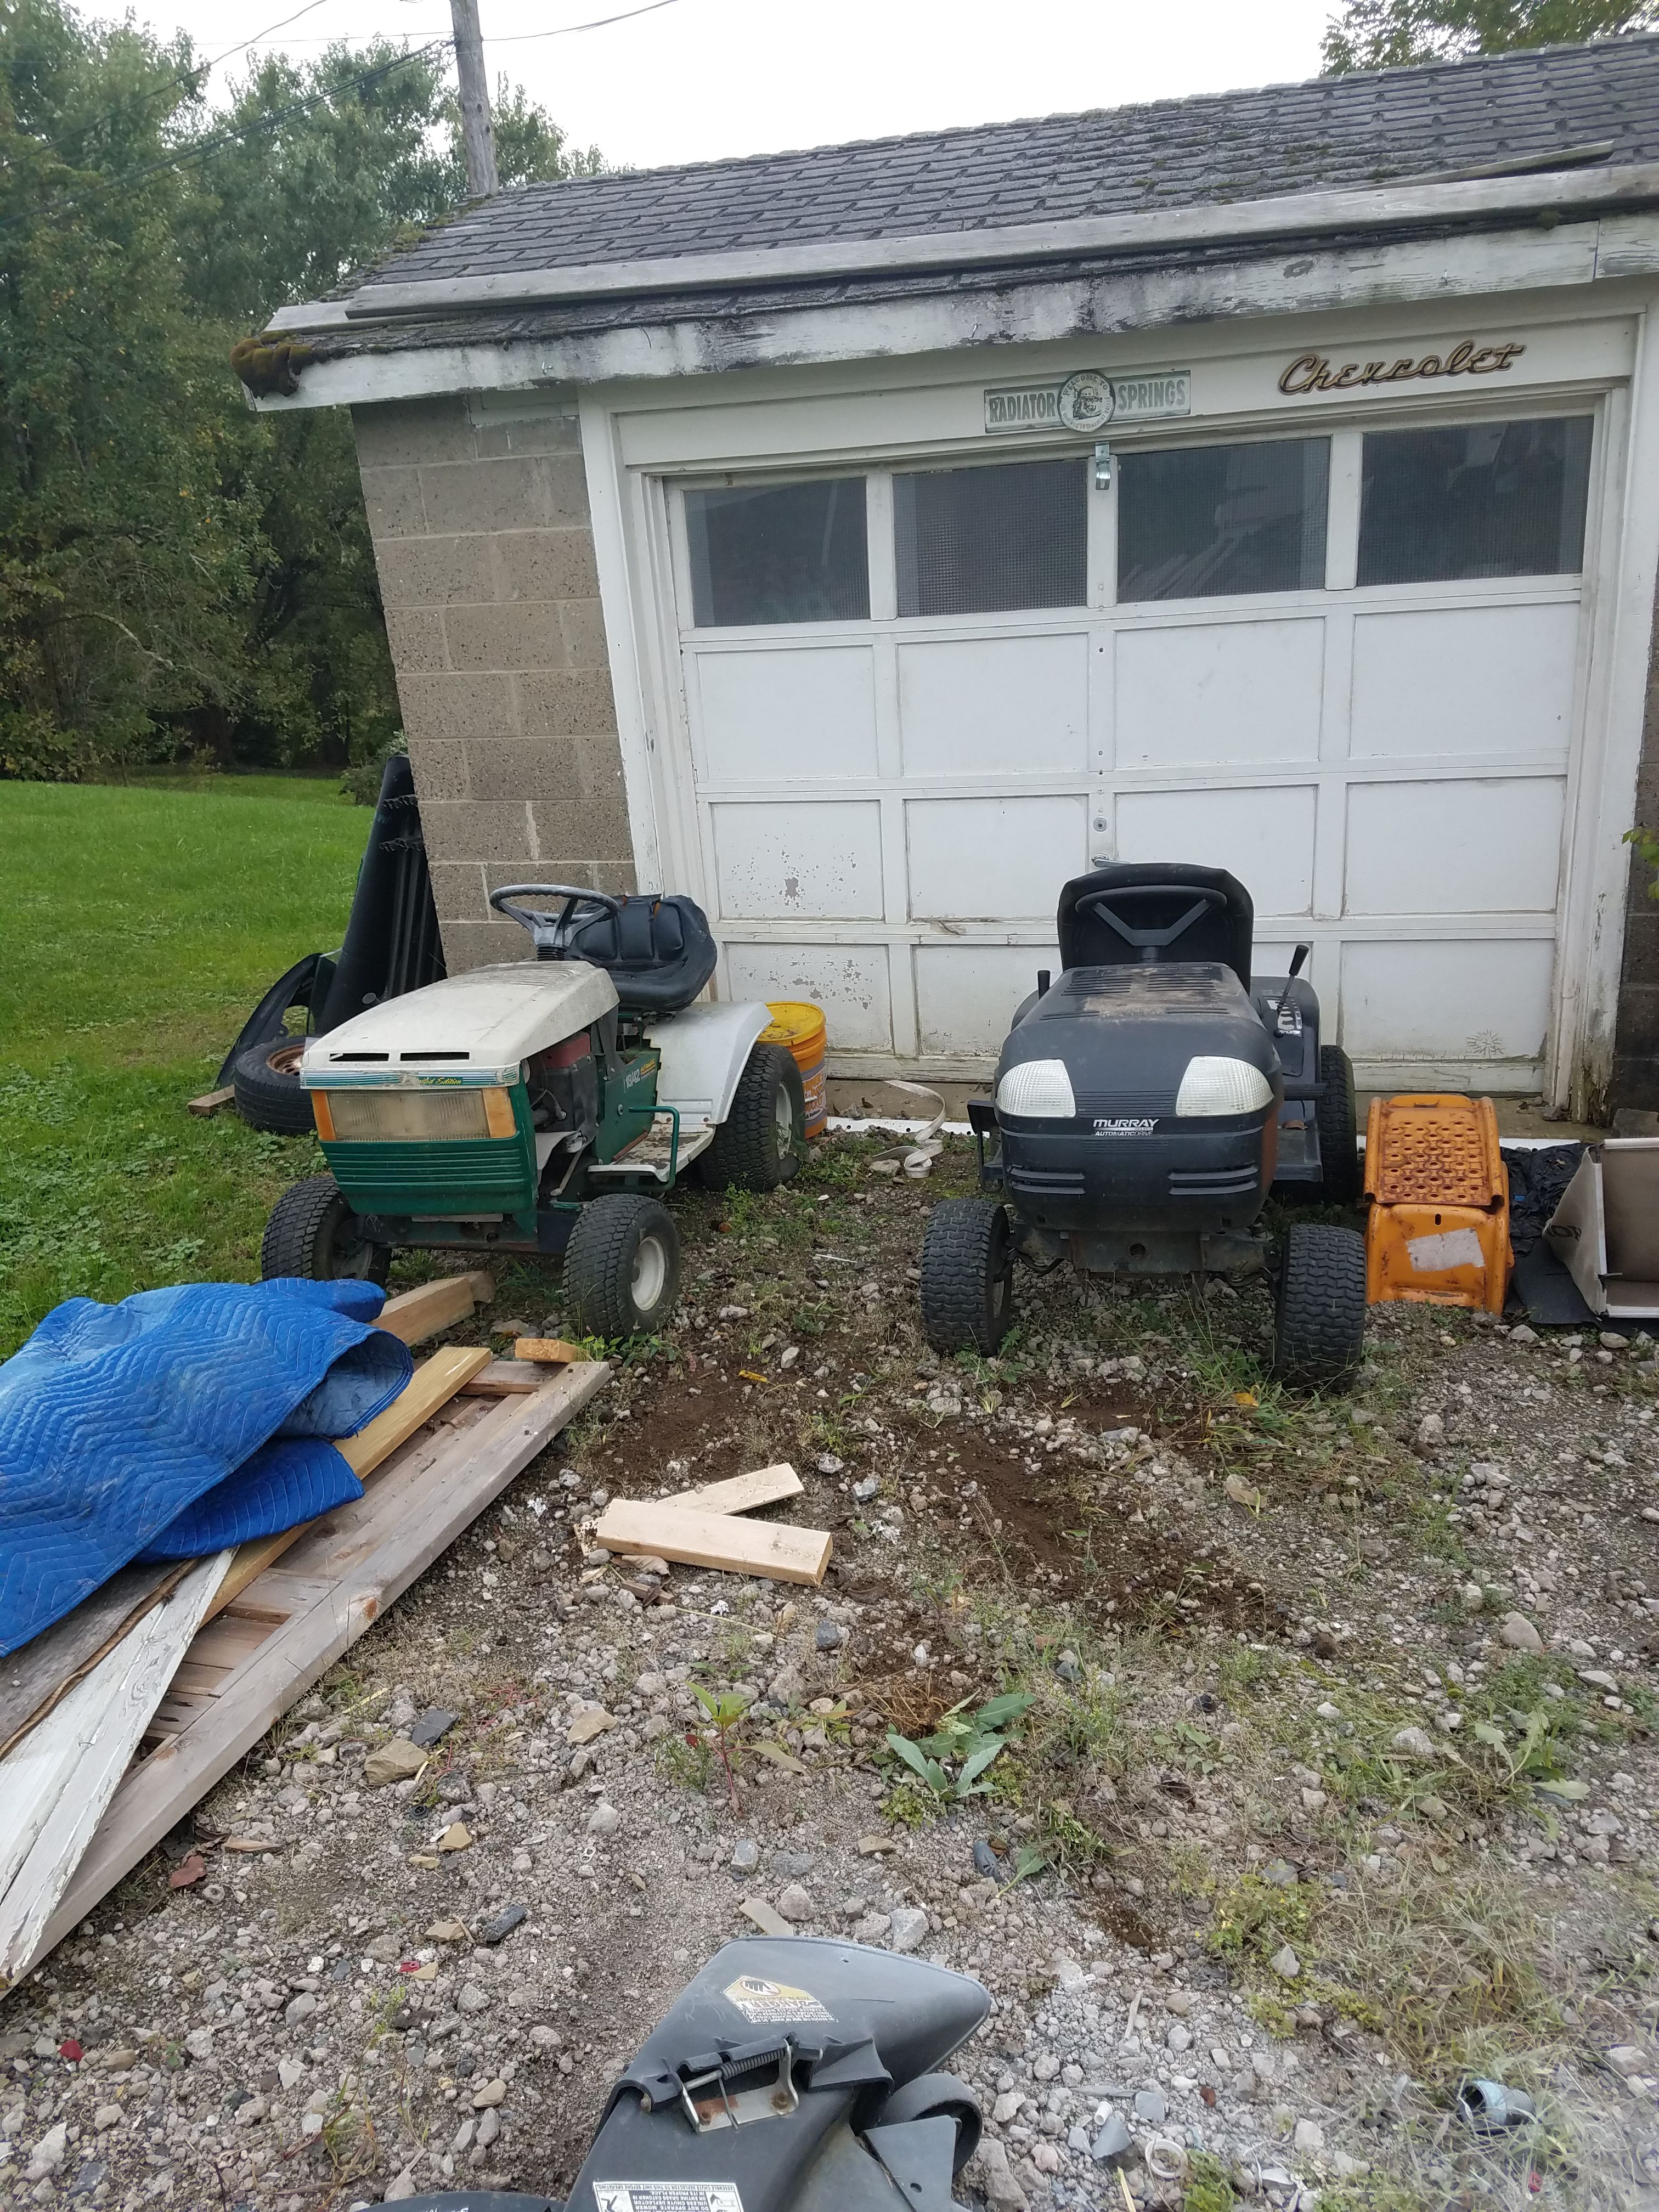 Tractor repair or parts